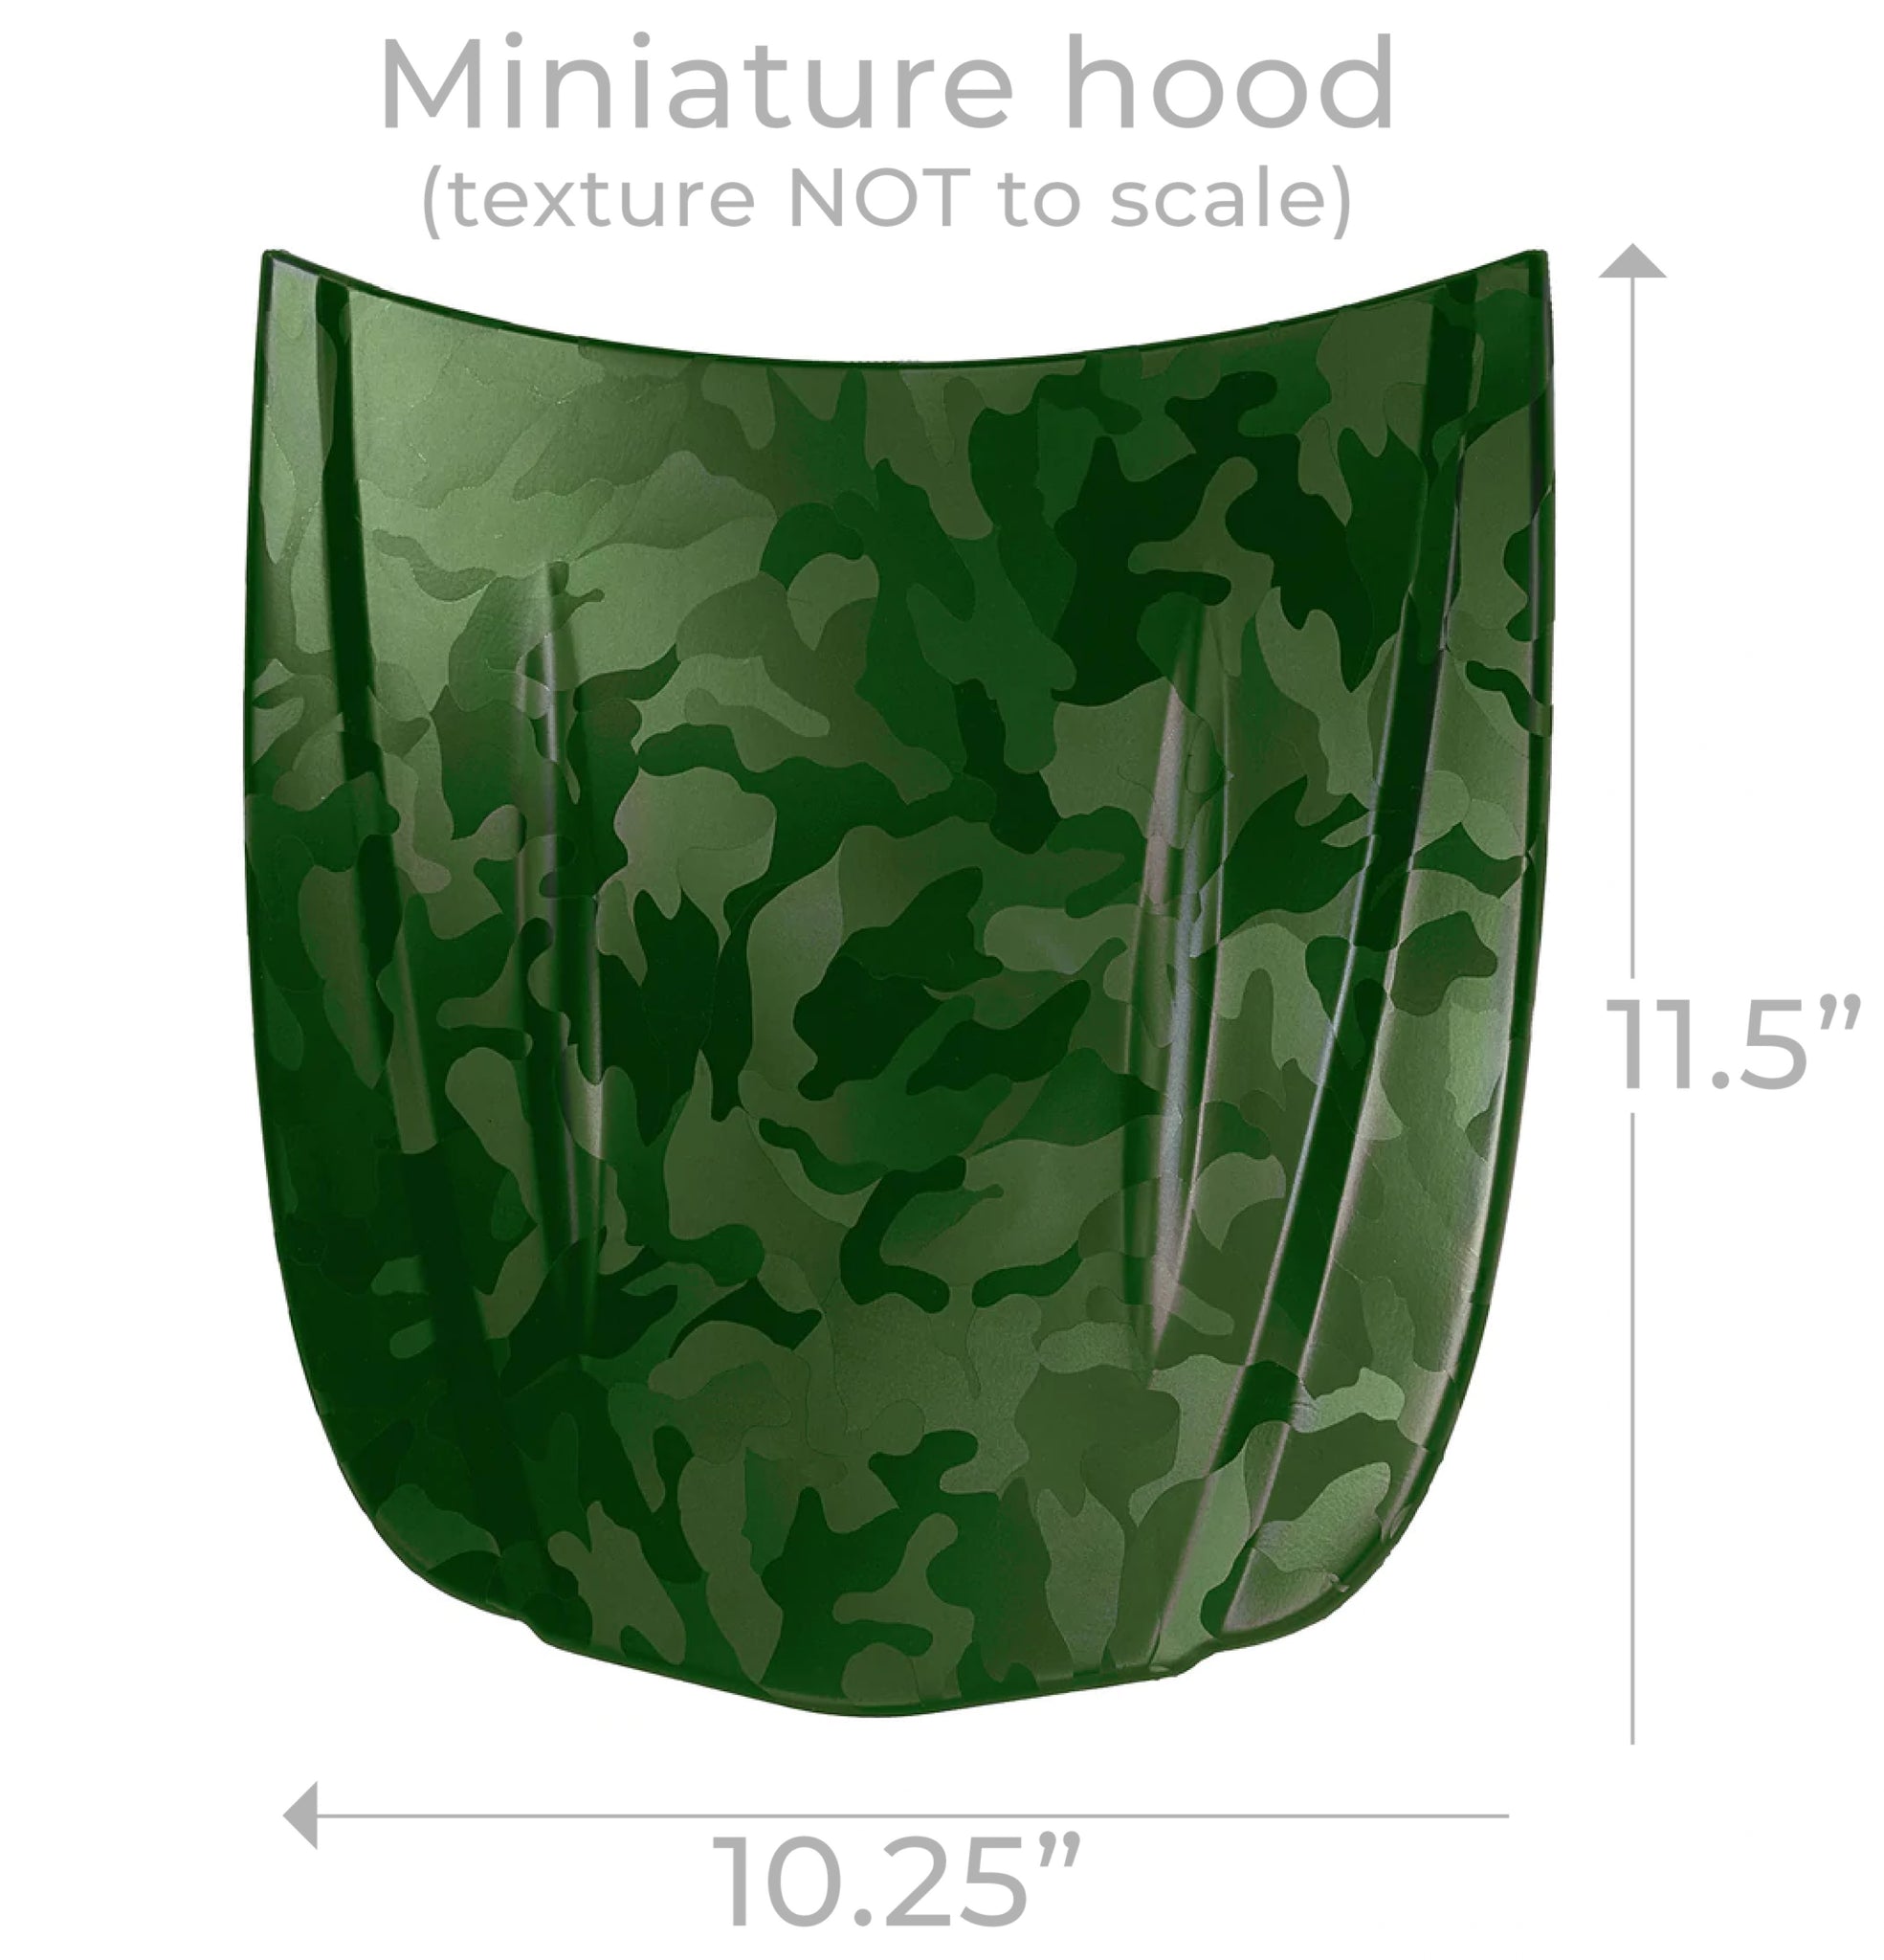 Stealth Gear Filet de camouflage 90x180 cm